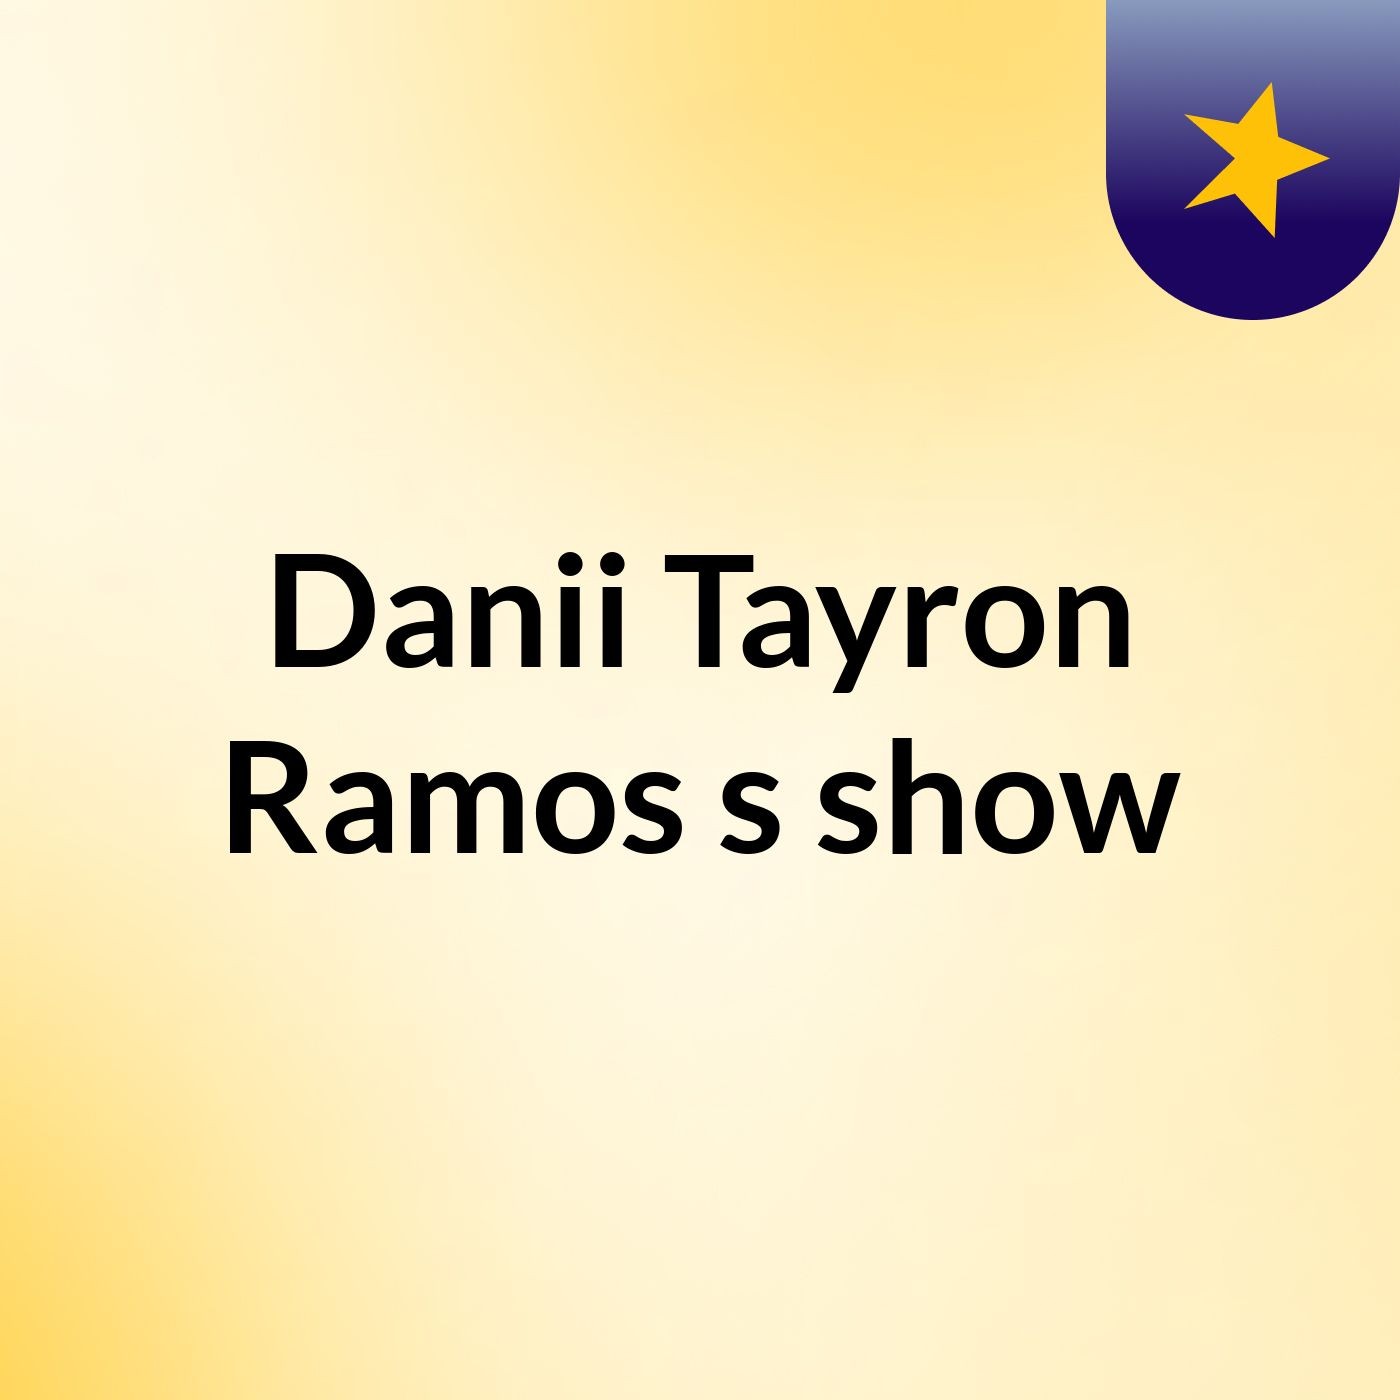 Danii Tayron Ramos's show